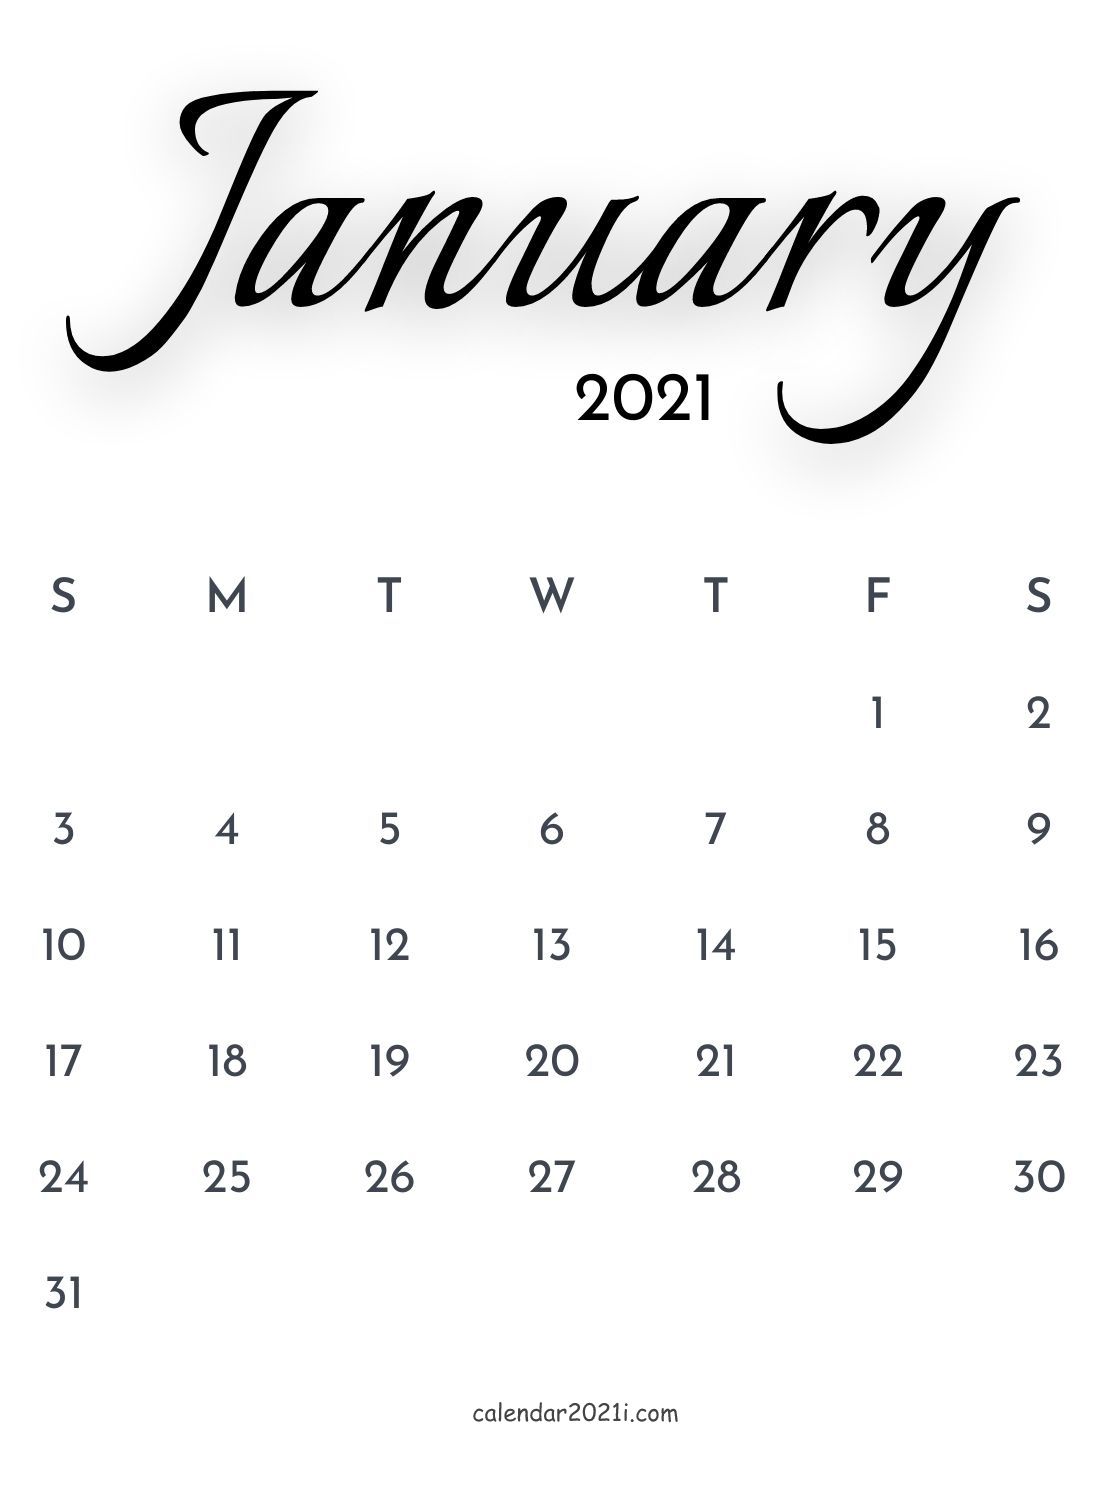 January 2021 Calligraphy Calendar